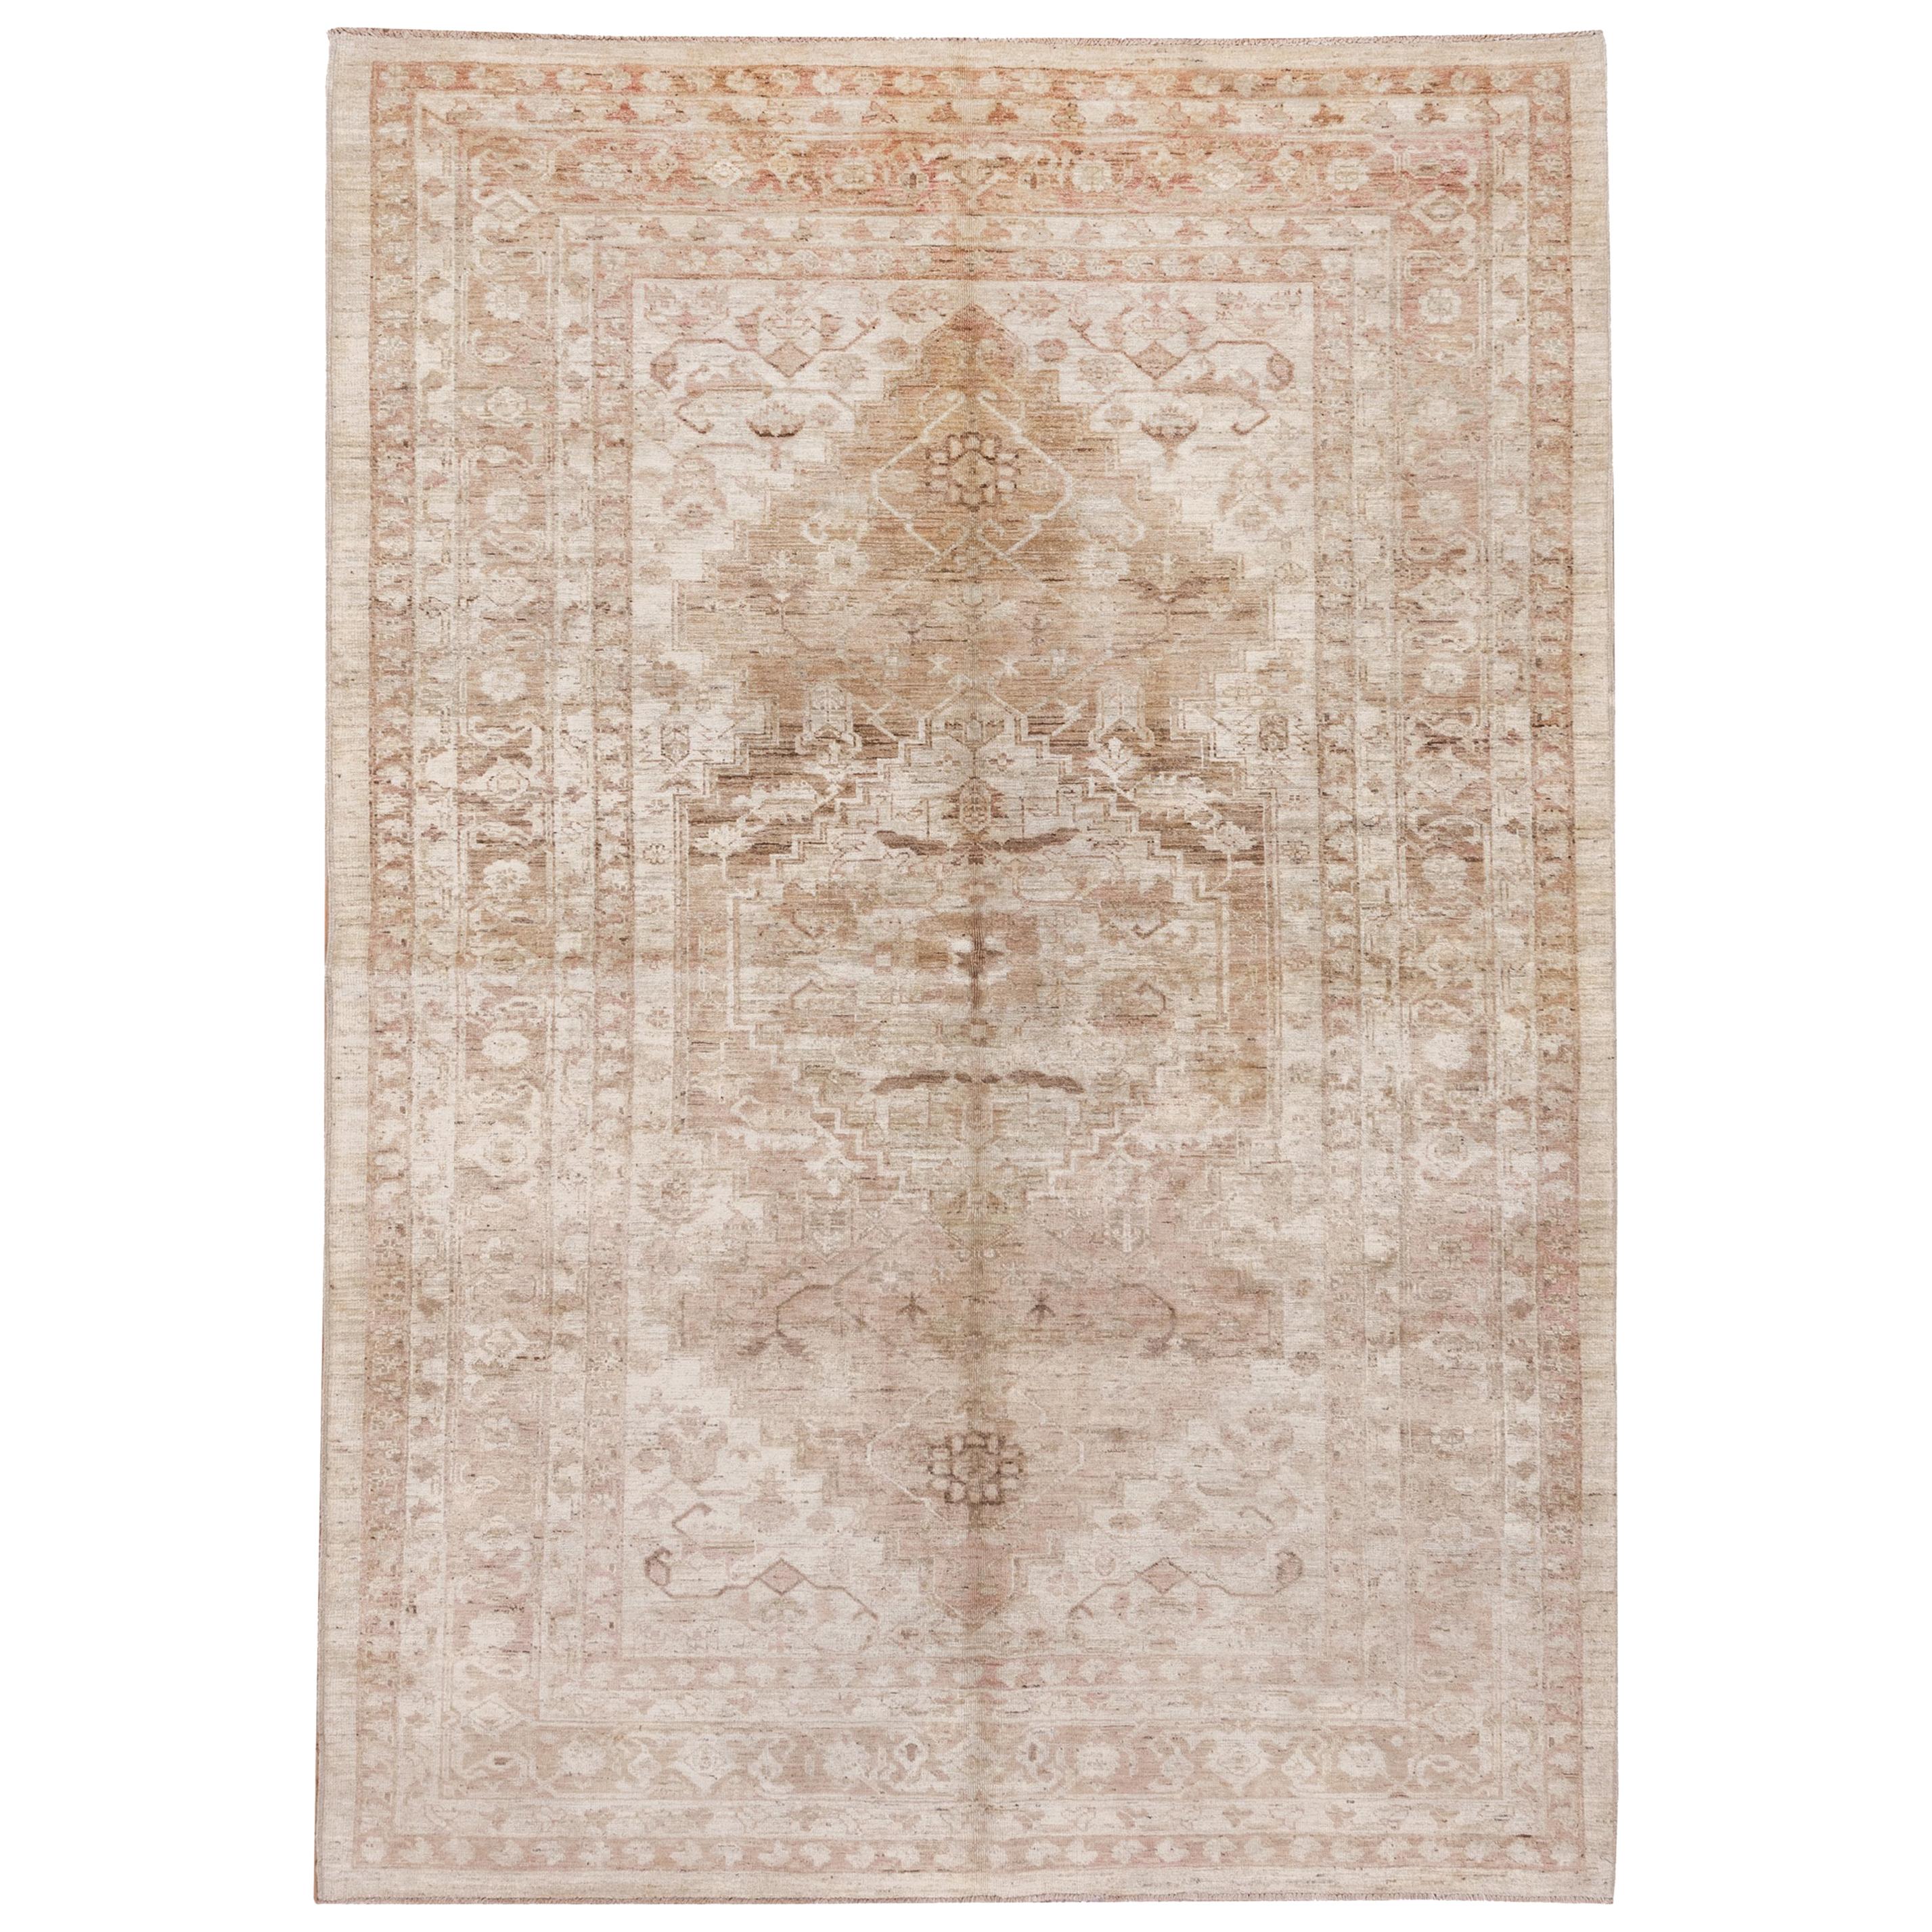 Neutral Persian Heriz Carpet For Sale